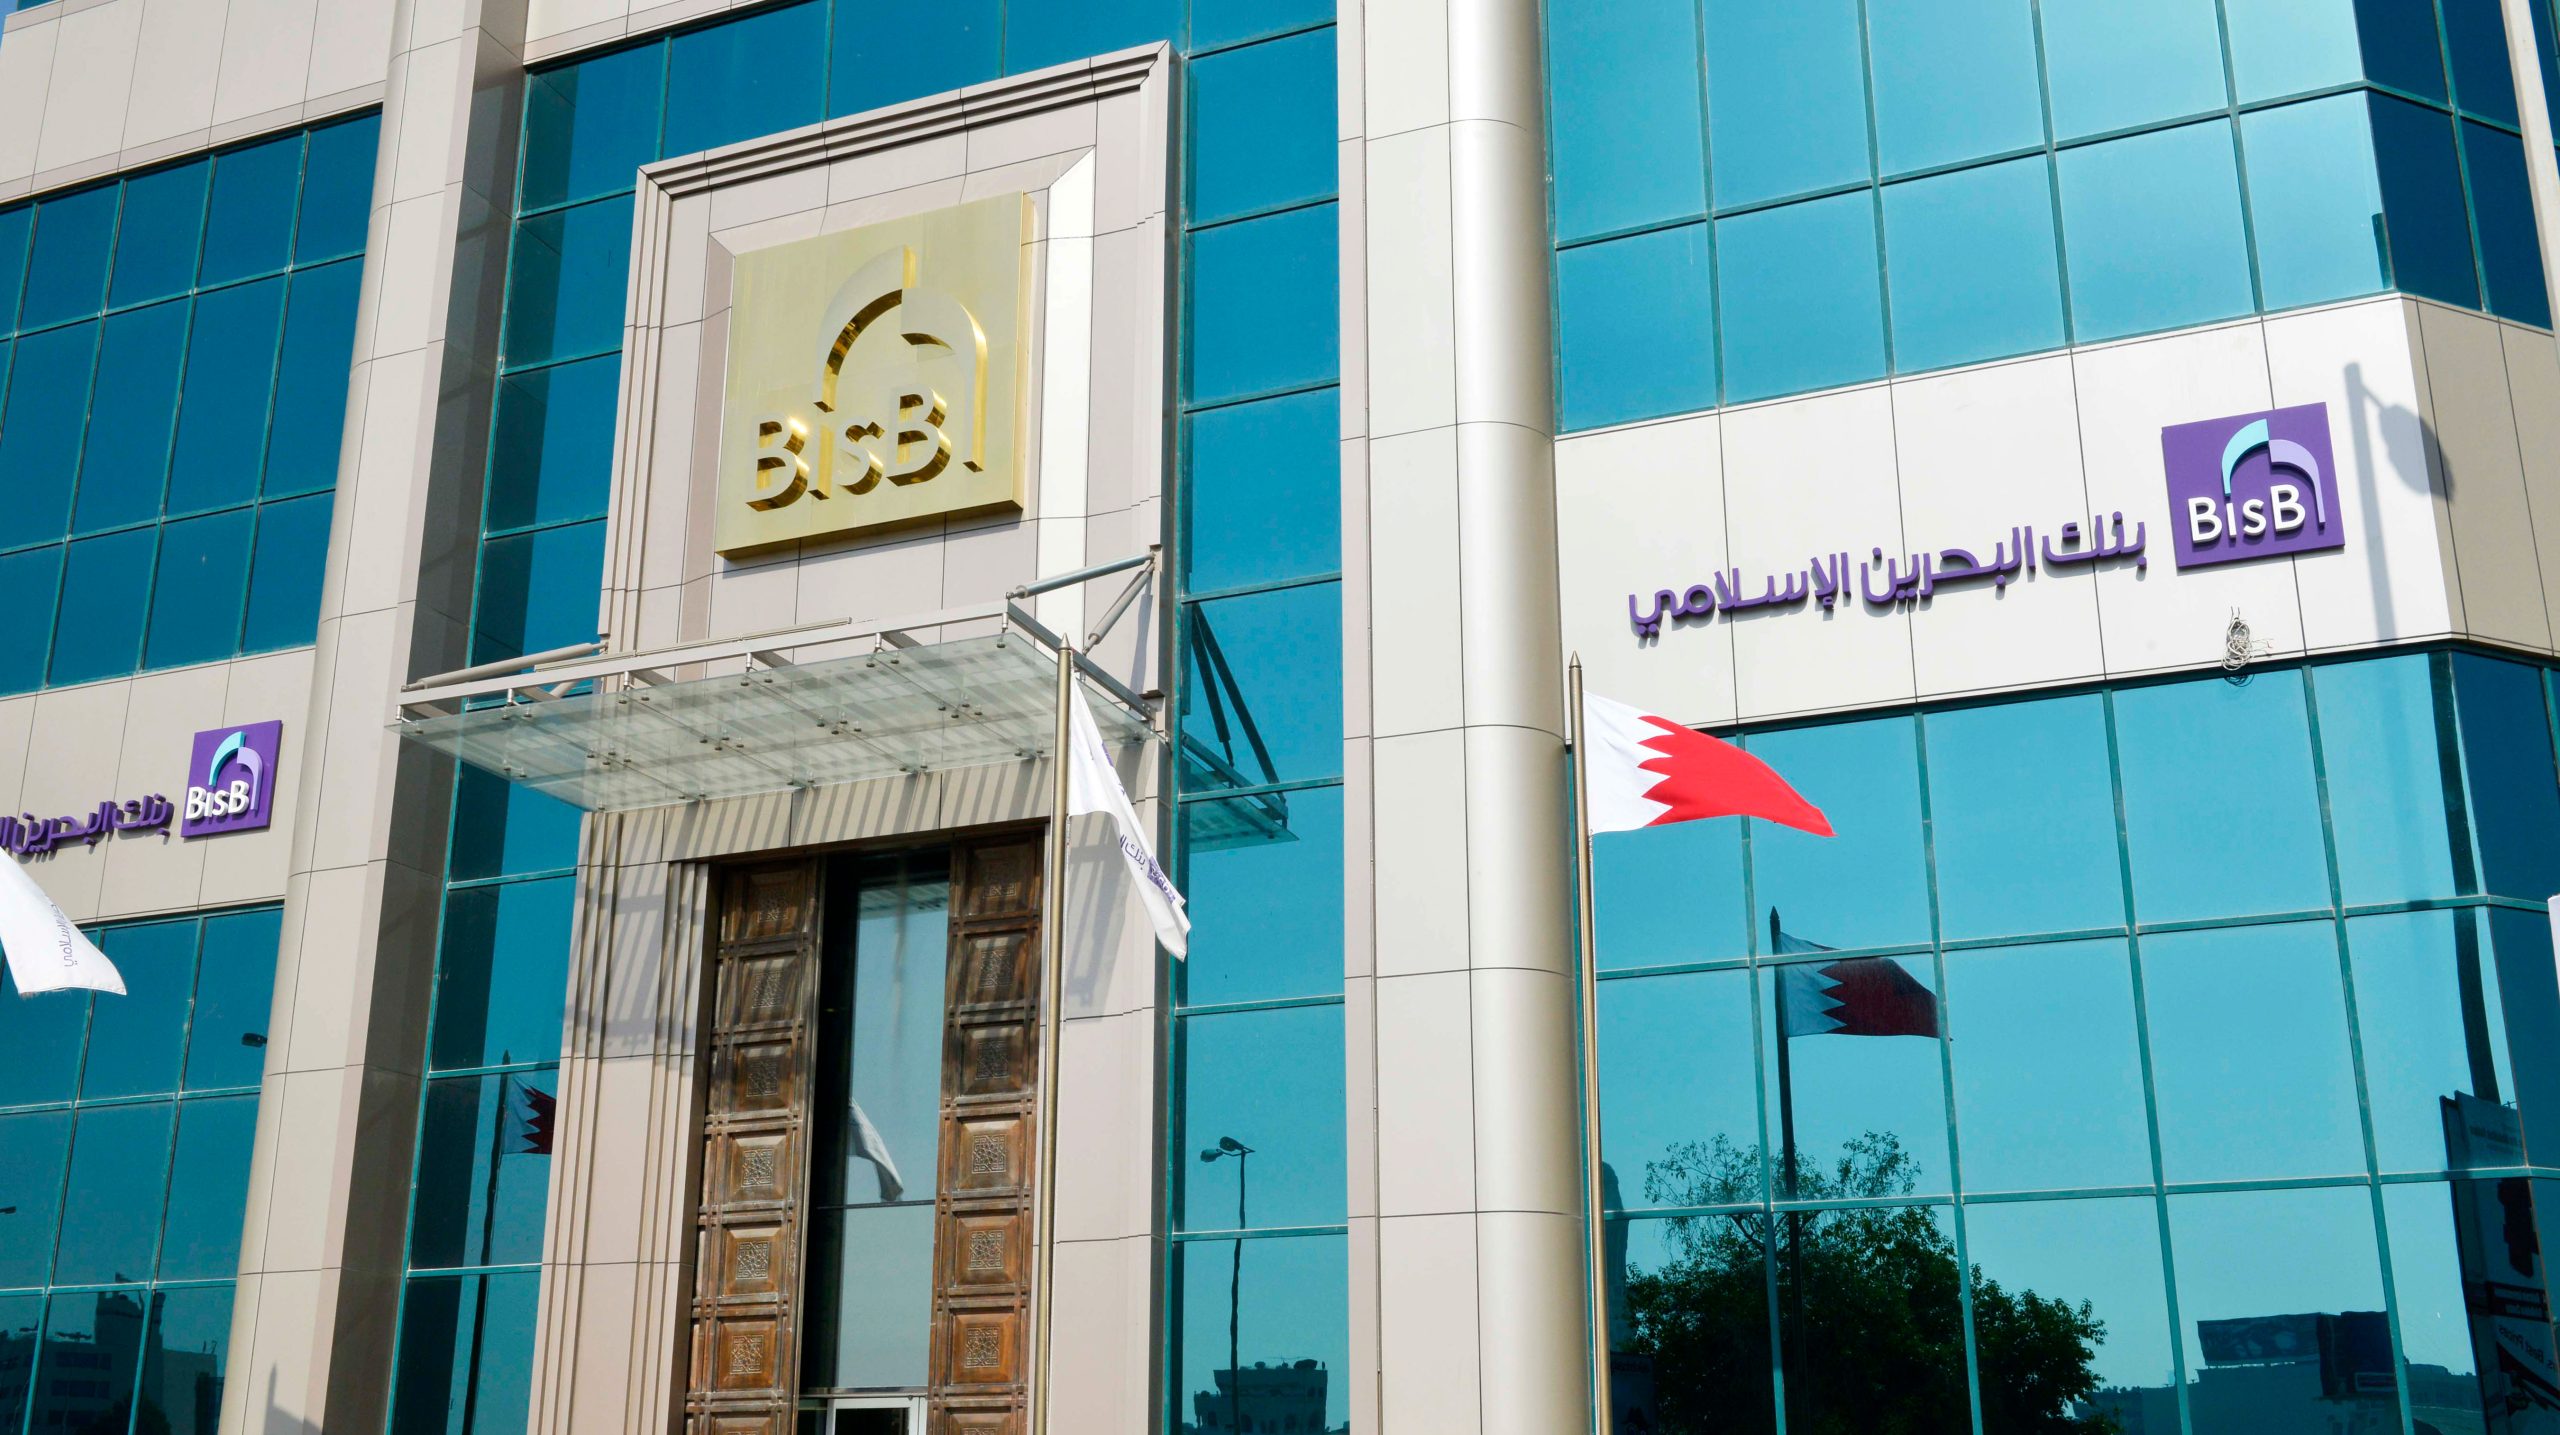 Bahrain Islamic Bank realises 70% performance improvement in critical workloads from Nutanix